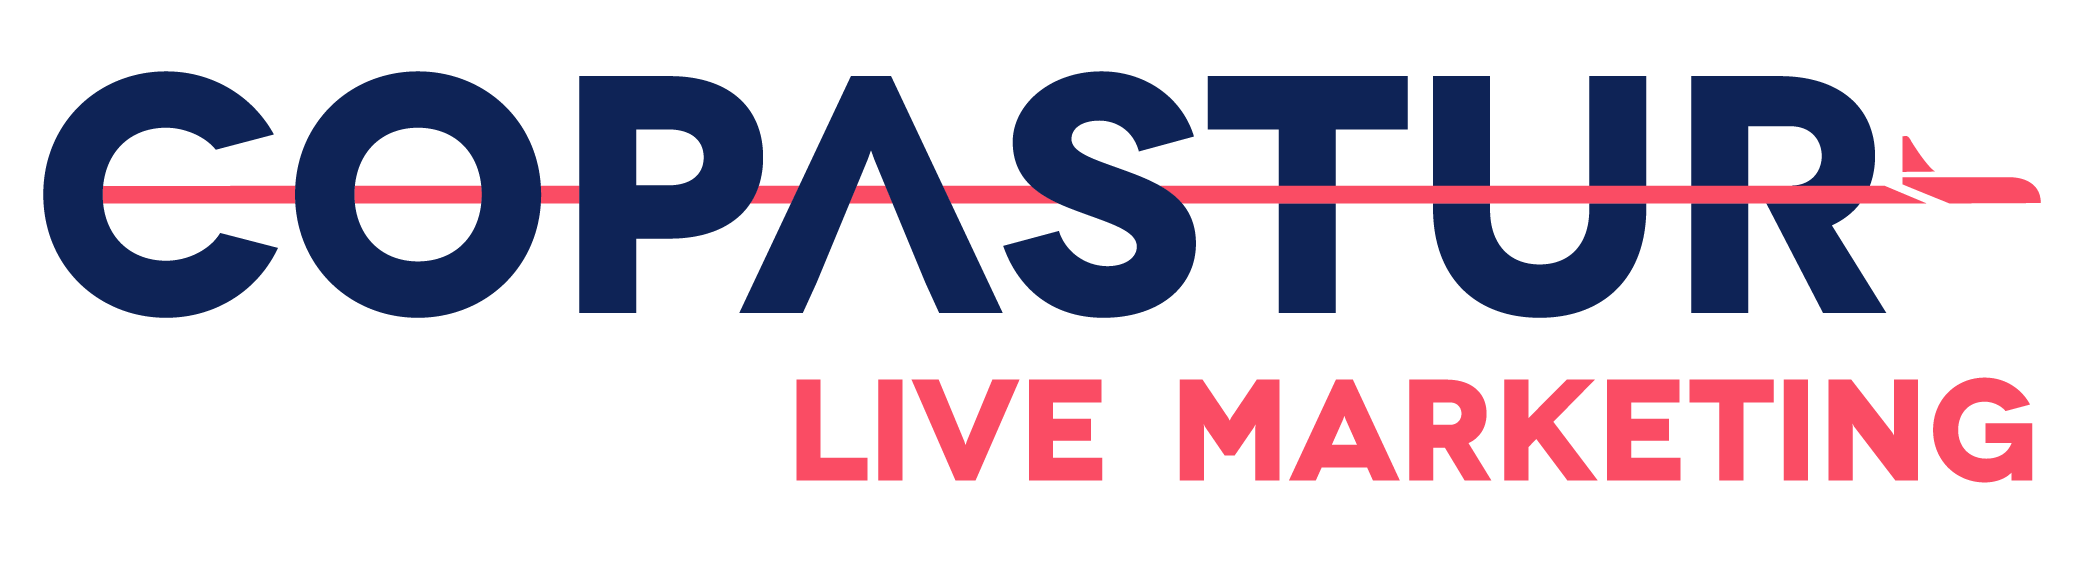 logotipo copastur live marketing